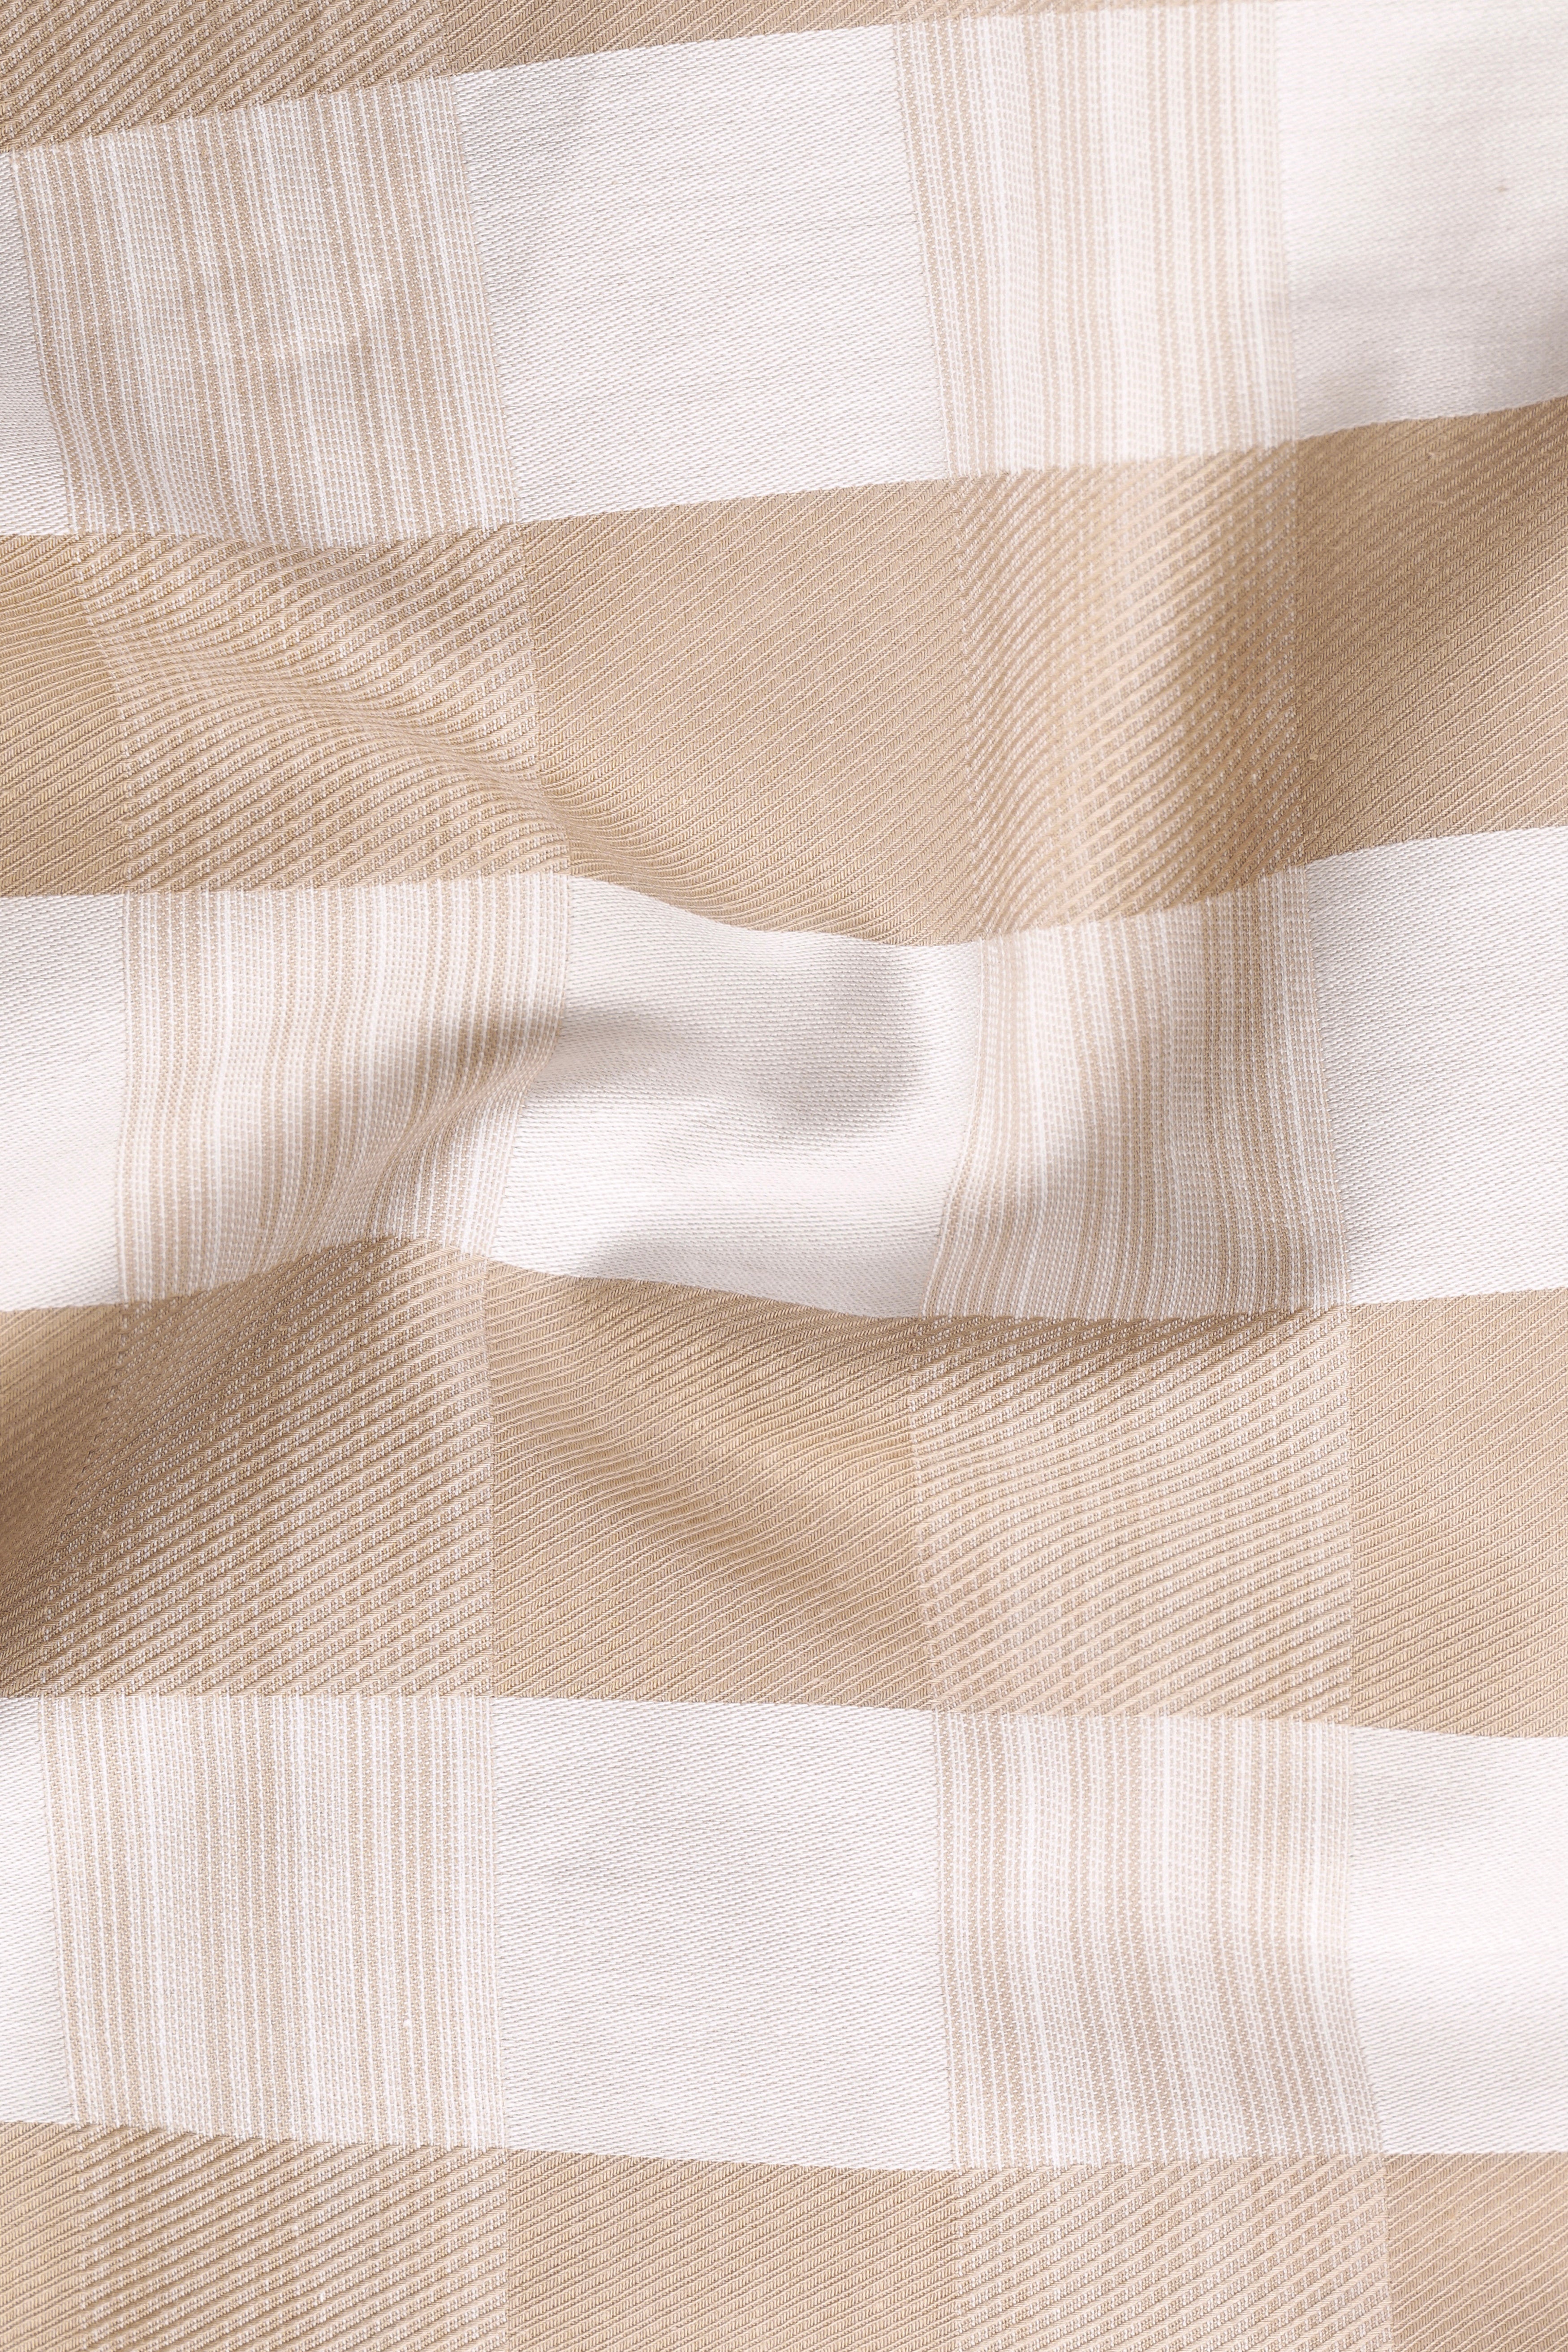 Cameo Brown with Vista White Plaid Jacquard Textured Premium Cotton Shirt